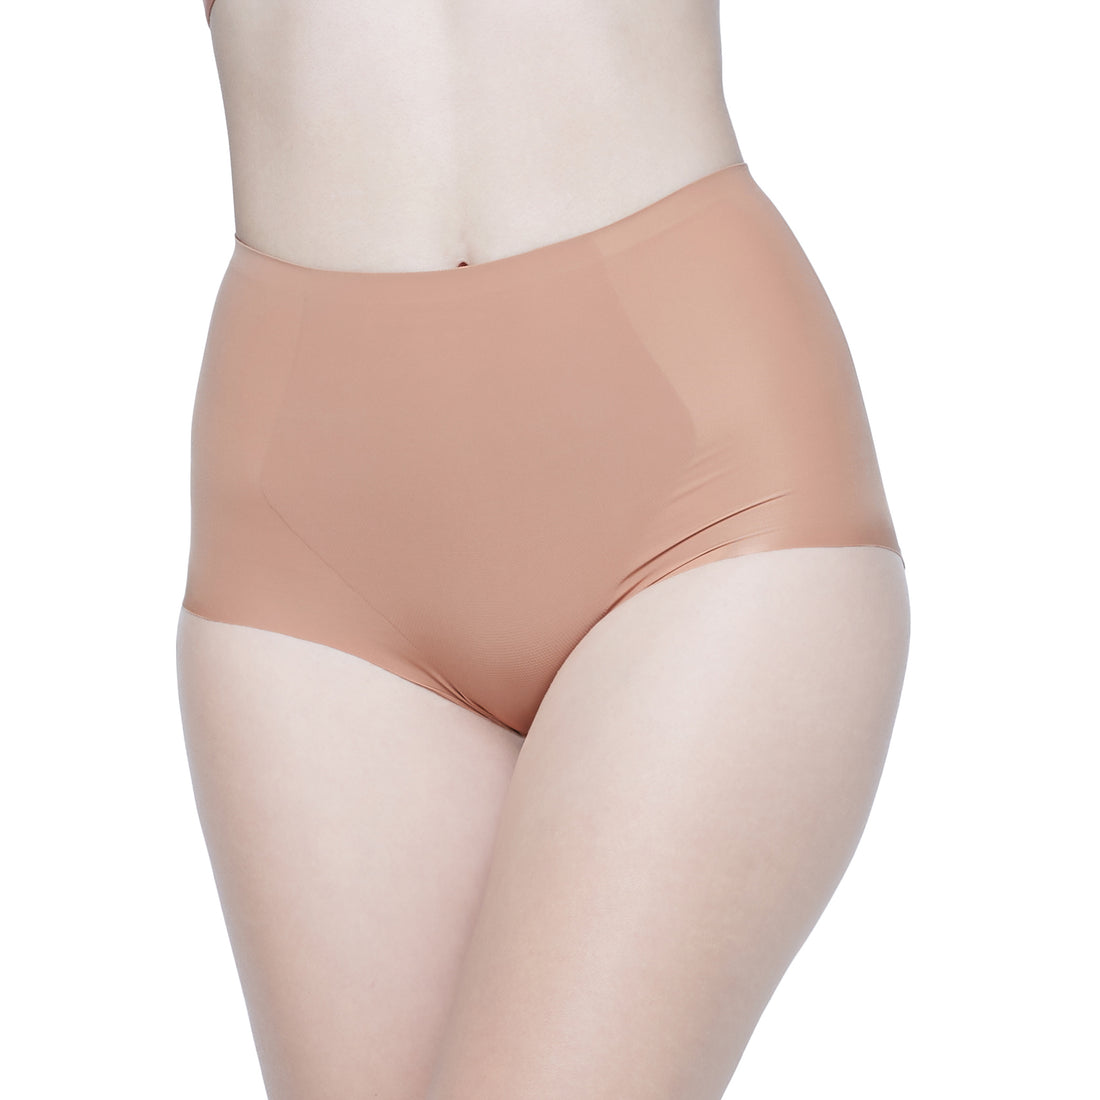 Wacoal Shape Beautifier Hips compression pants, model WY1616, brick orange (BN)